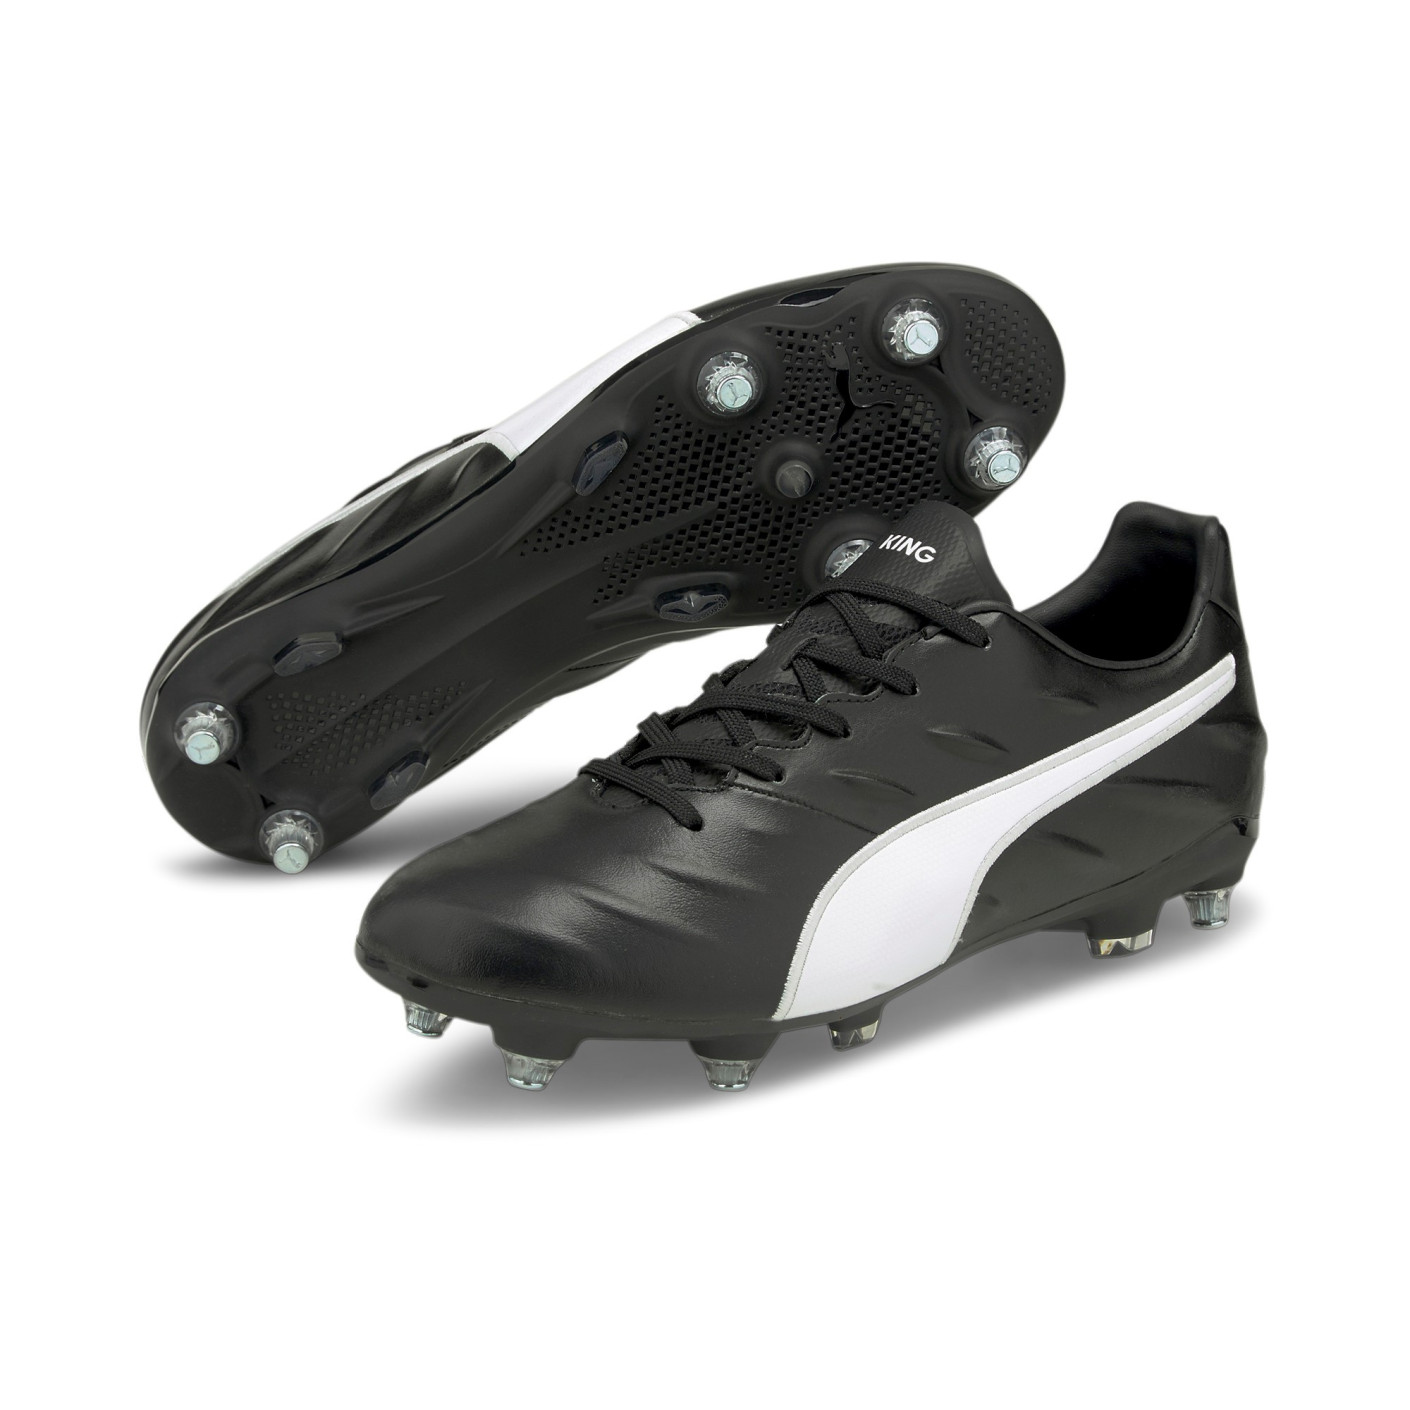 Chaussures de foot Puma King Pro 21 Iron-Nop (SG) Noir/blanc